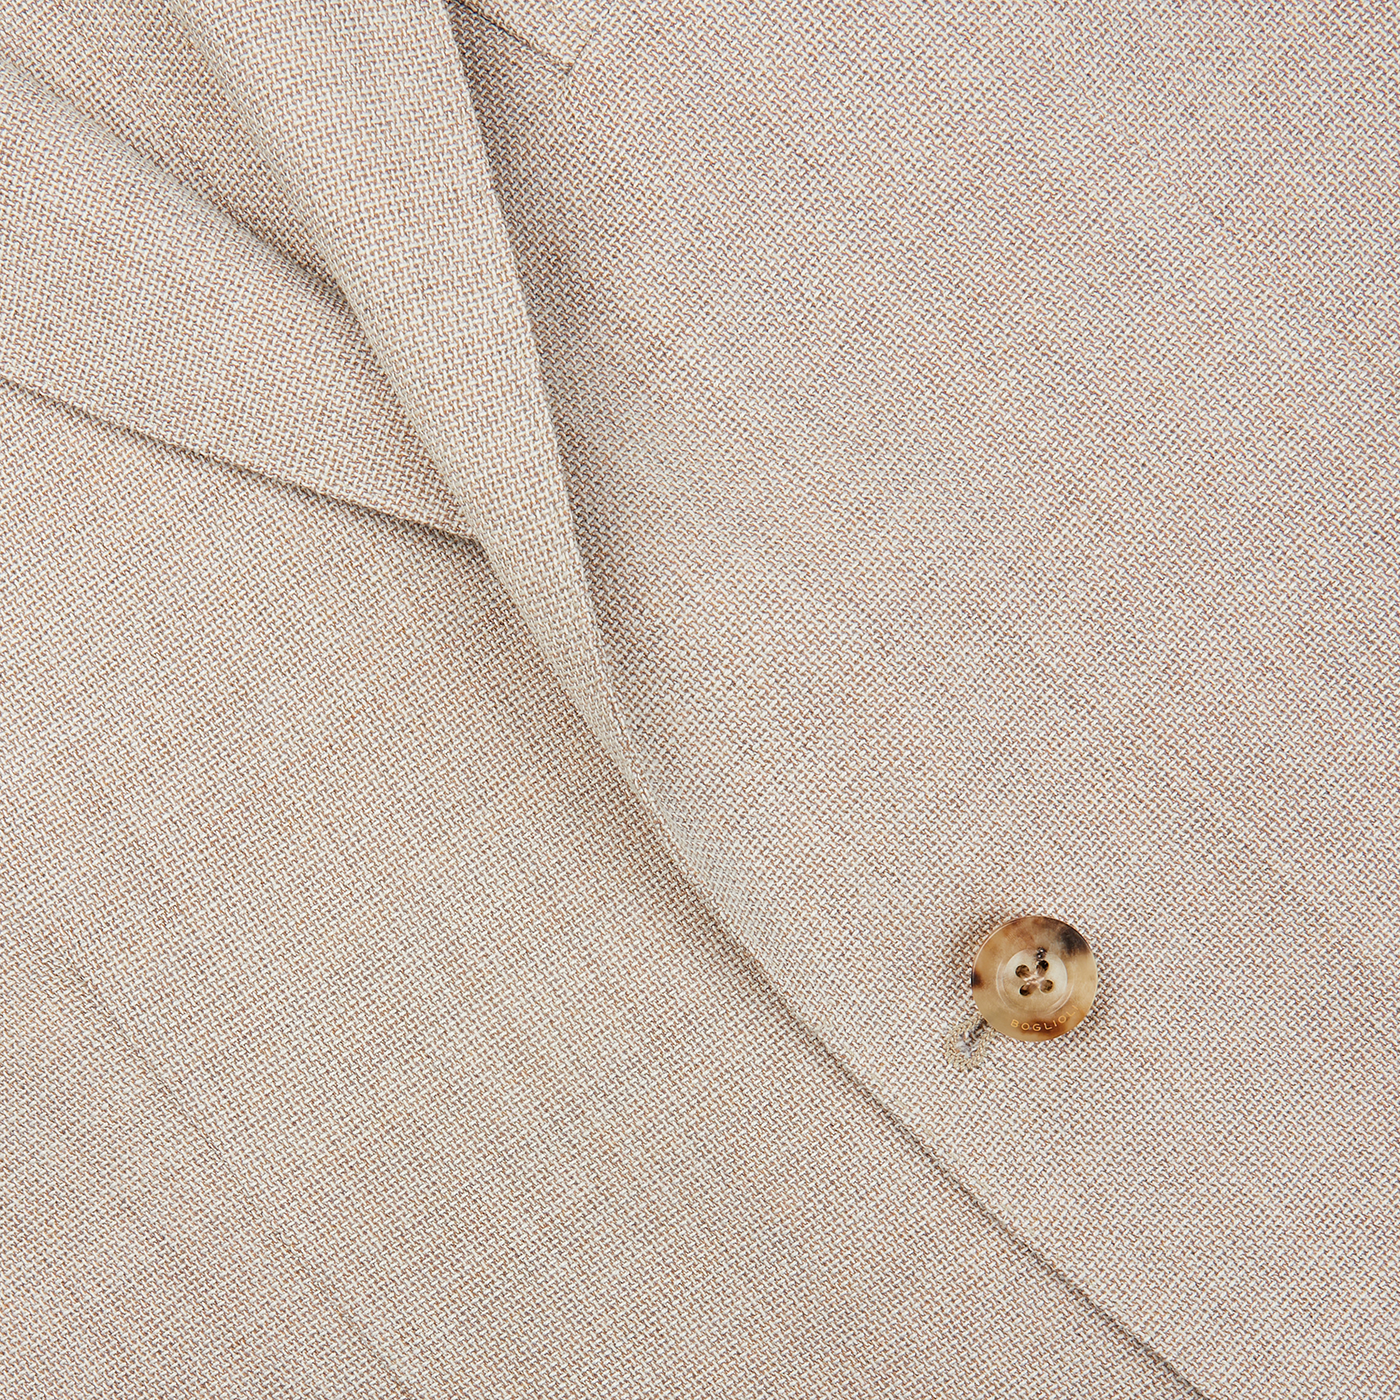 A close up of a cream beige Boglioli suit with a gold button showcasing exquisite craftsmanship.